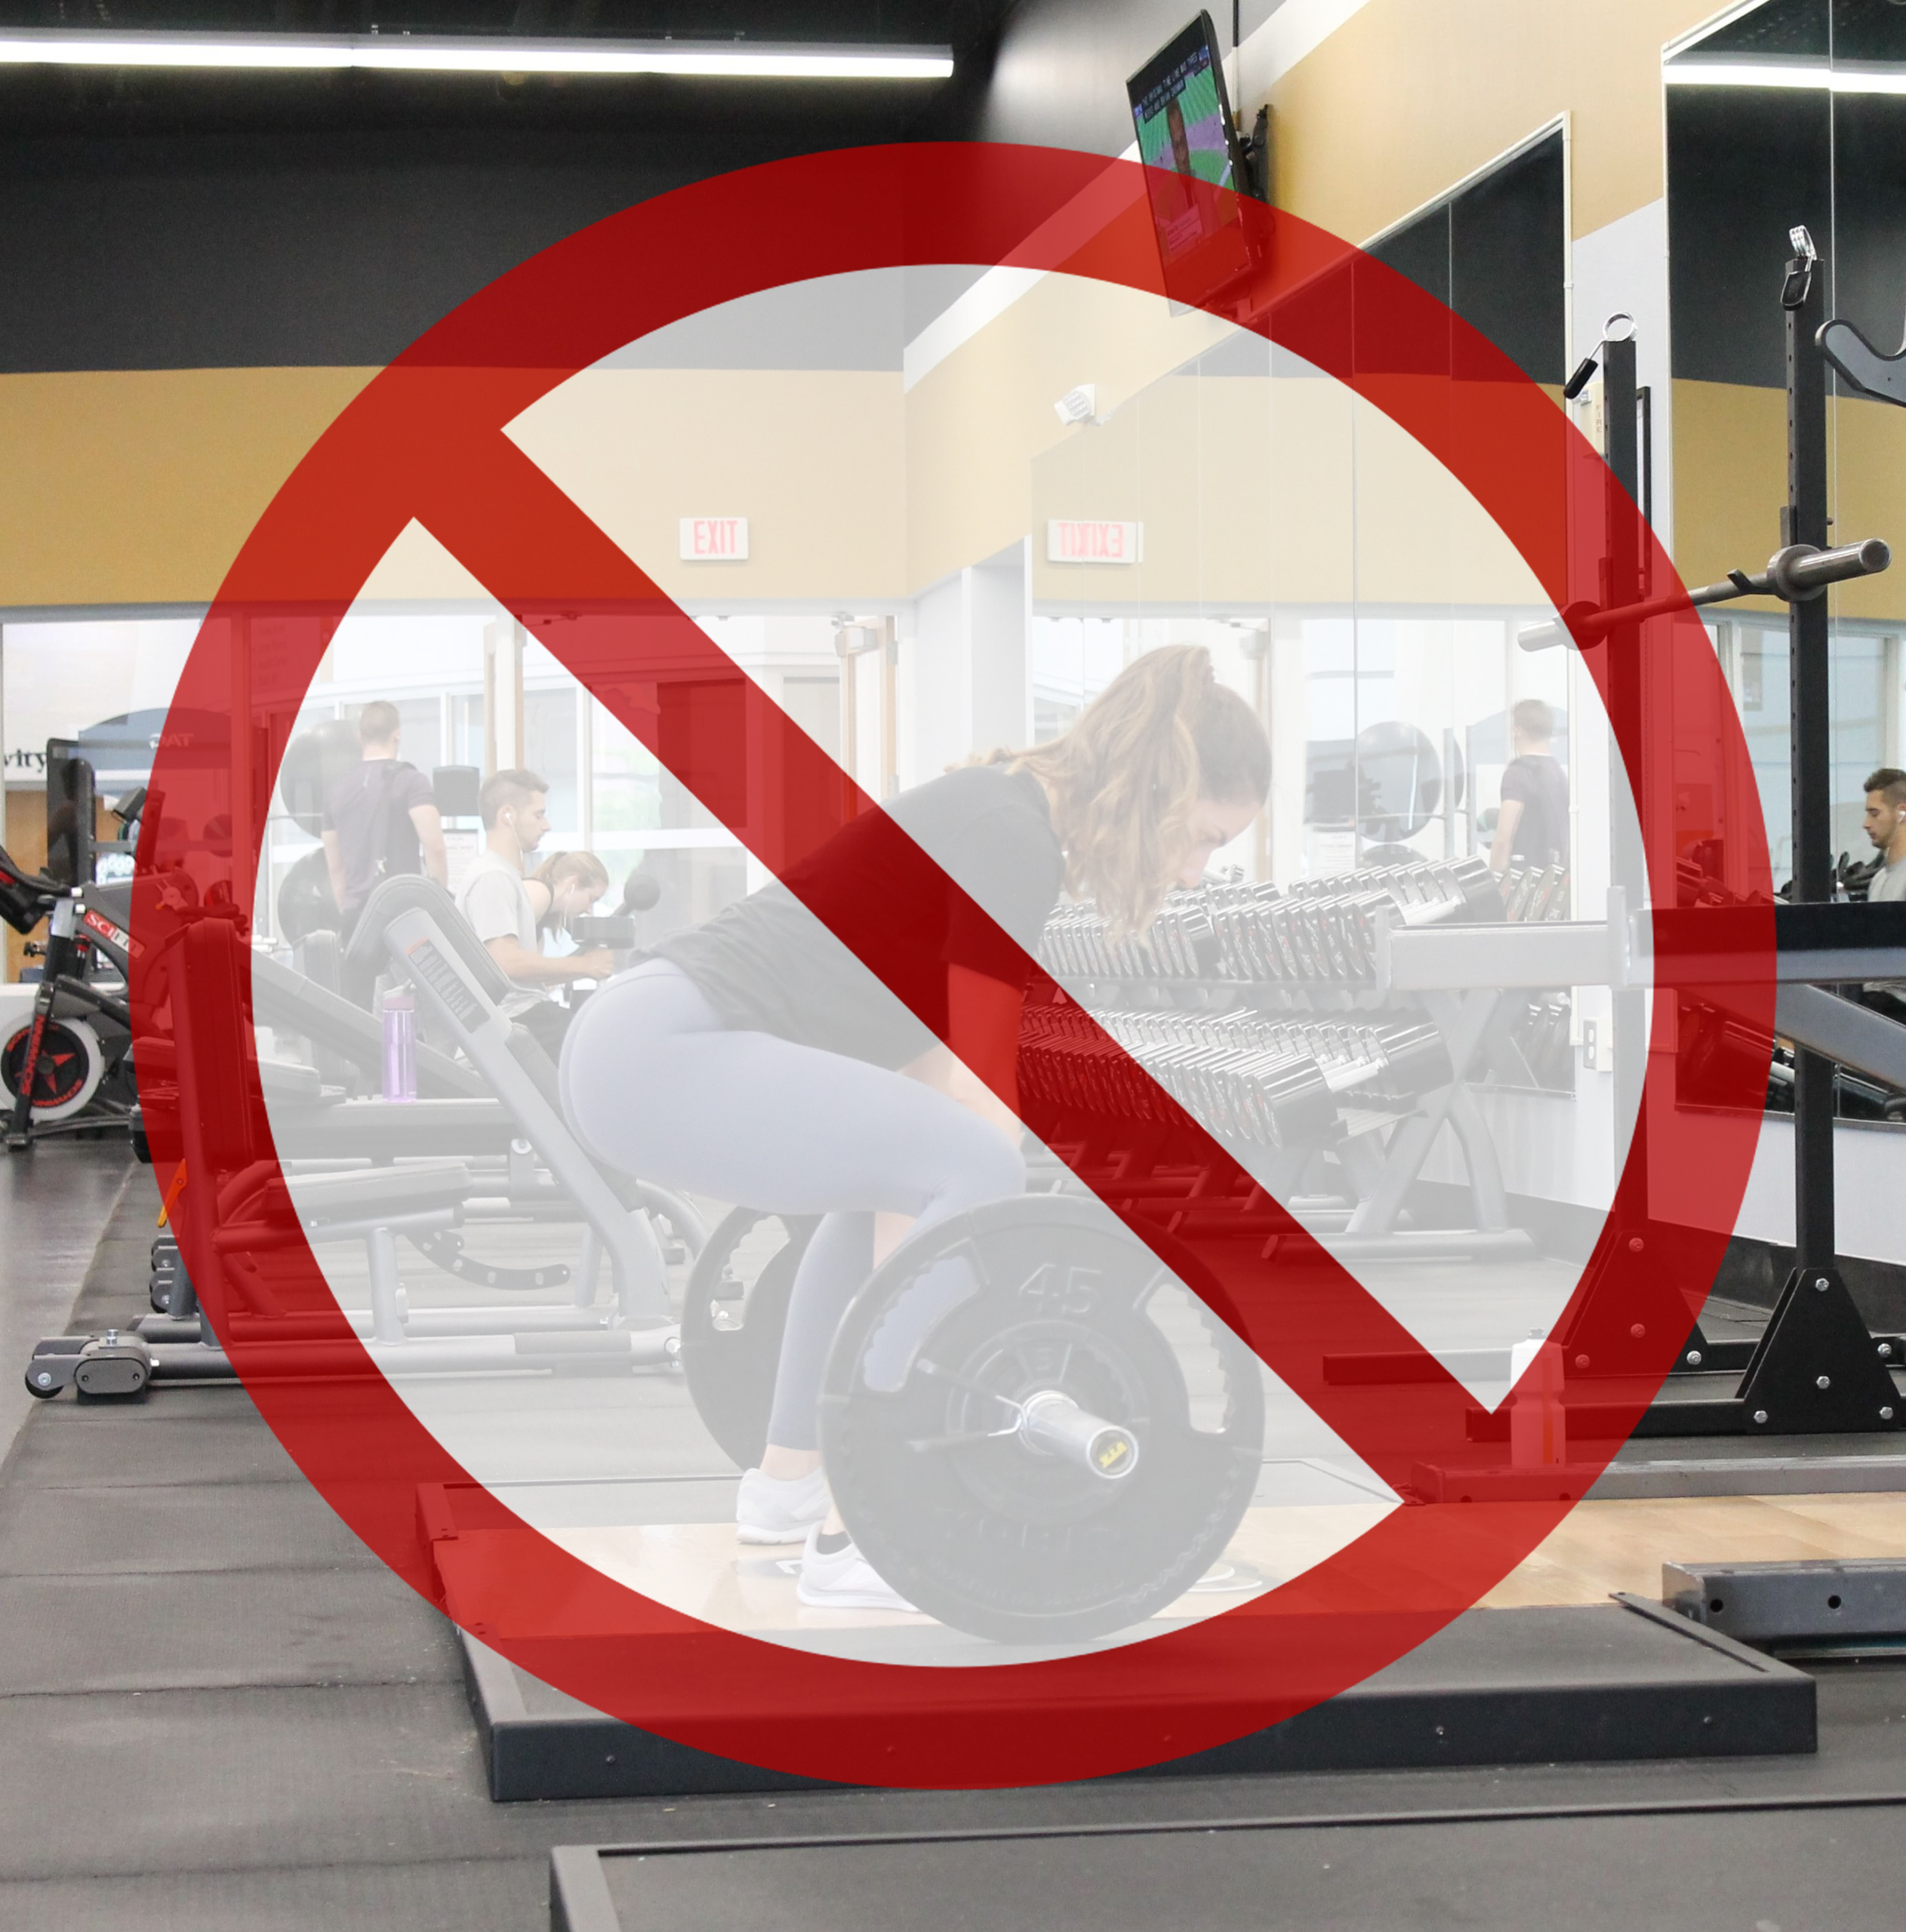 Fitnessstudios bleiben weiterhin geschlossen: Tipps vom cardioscan-Experten